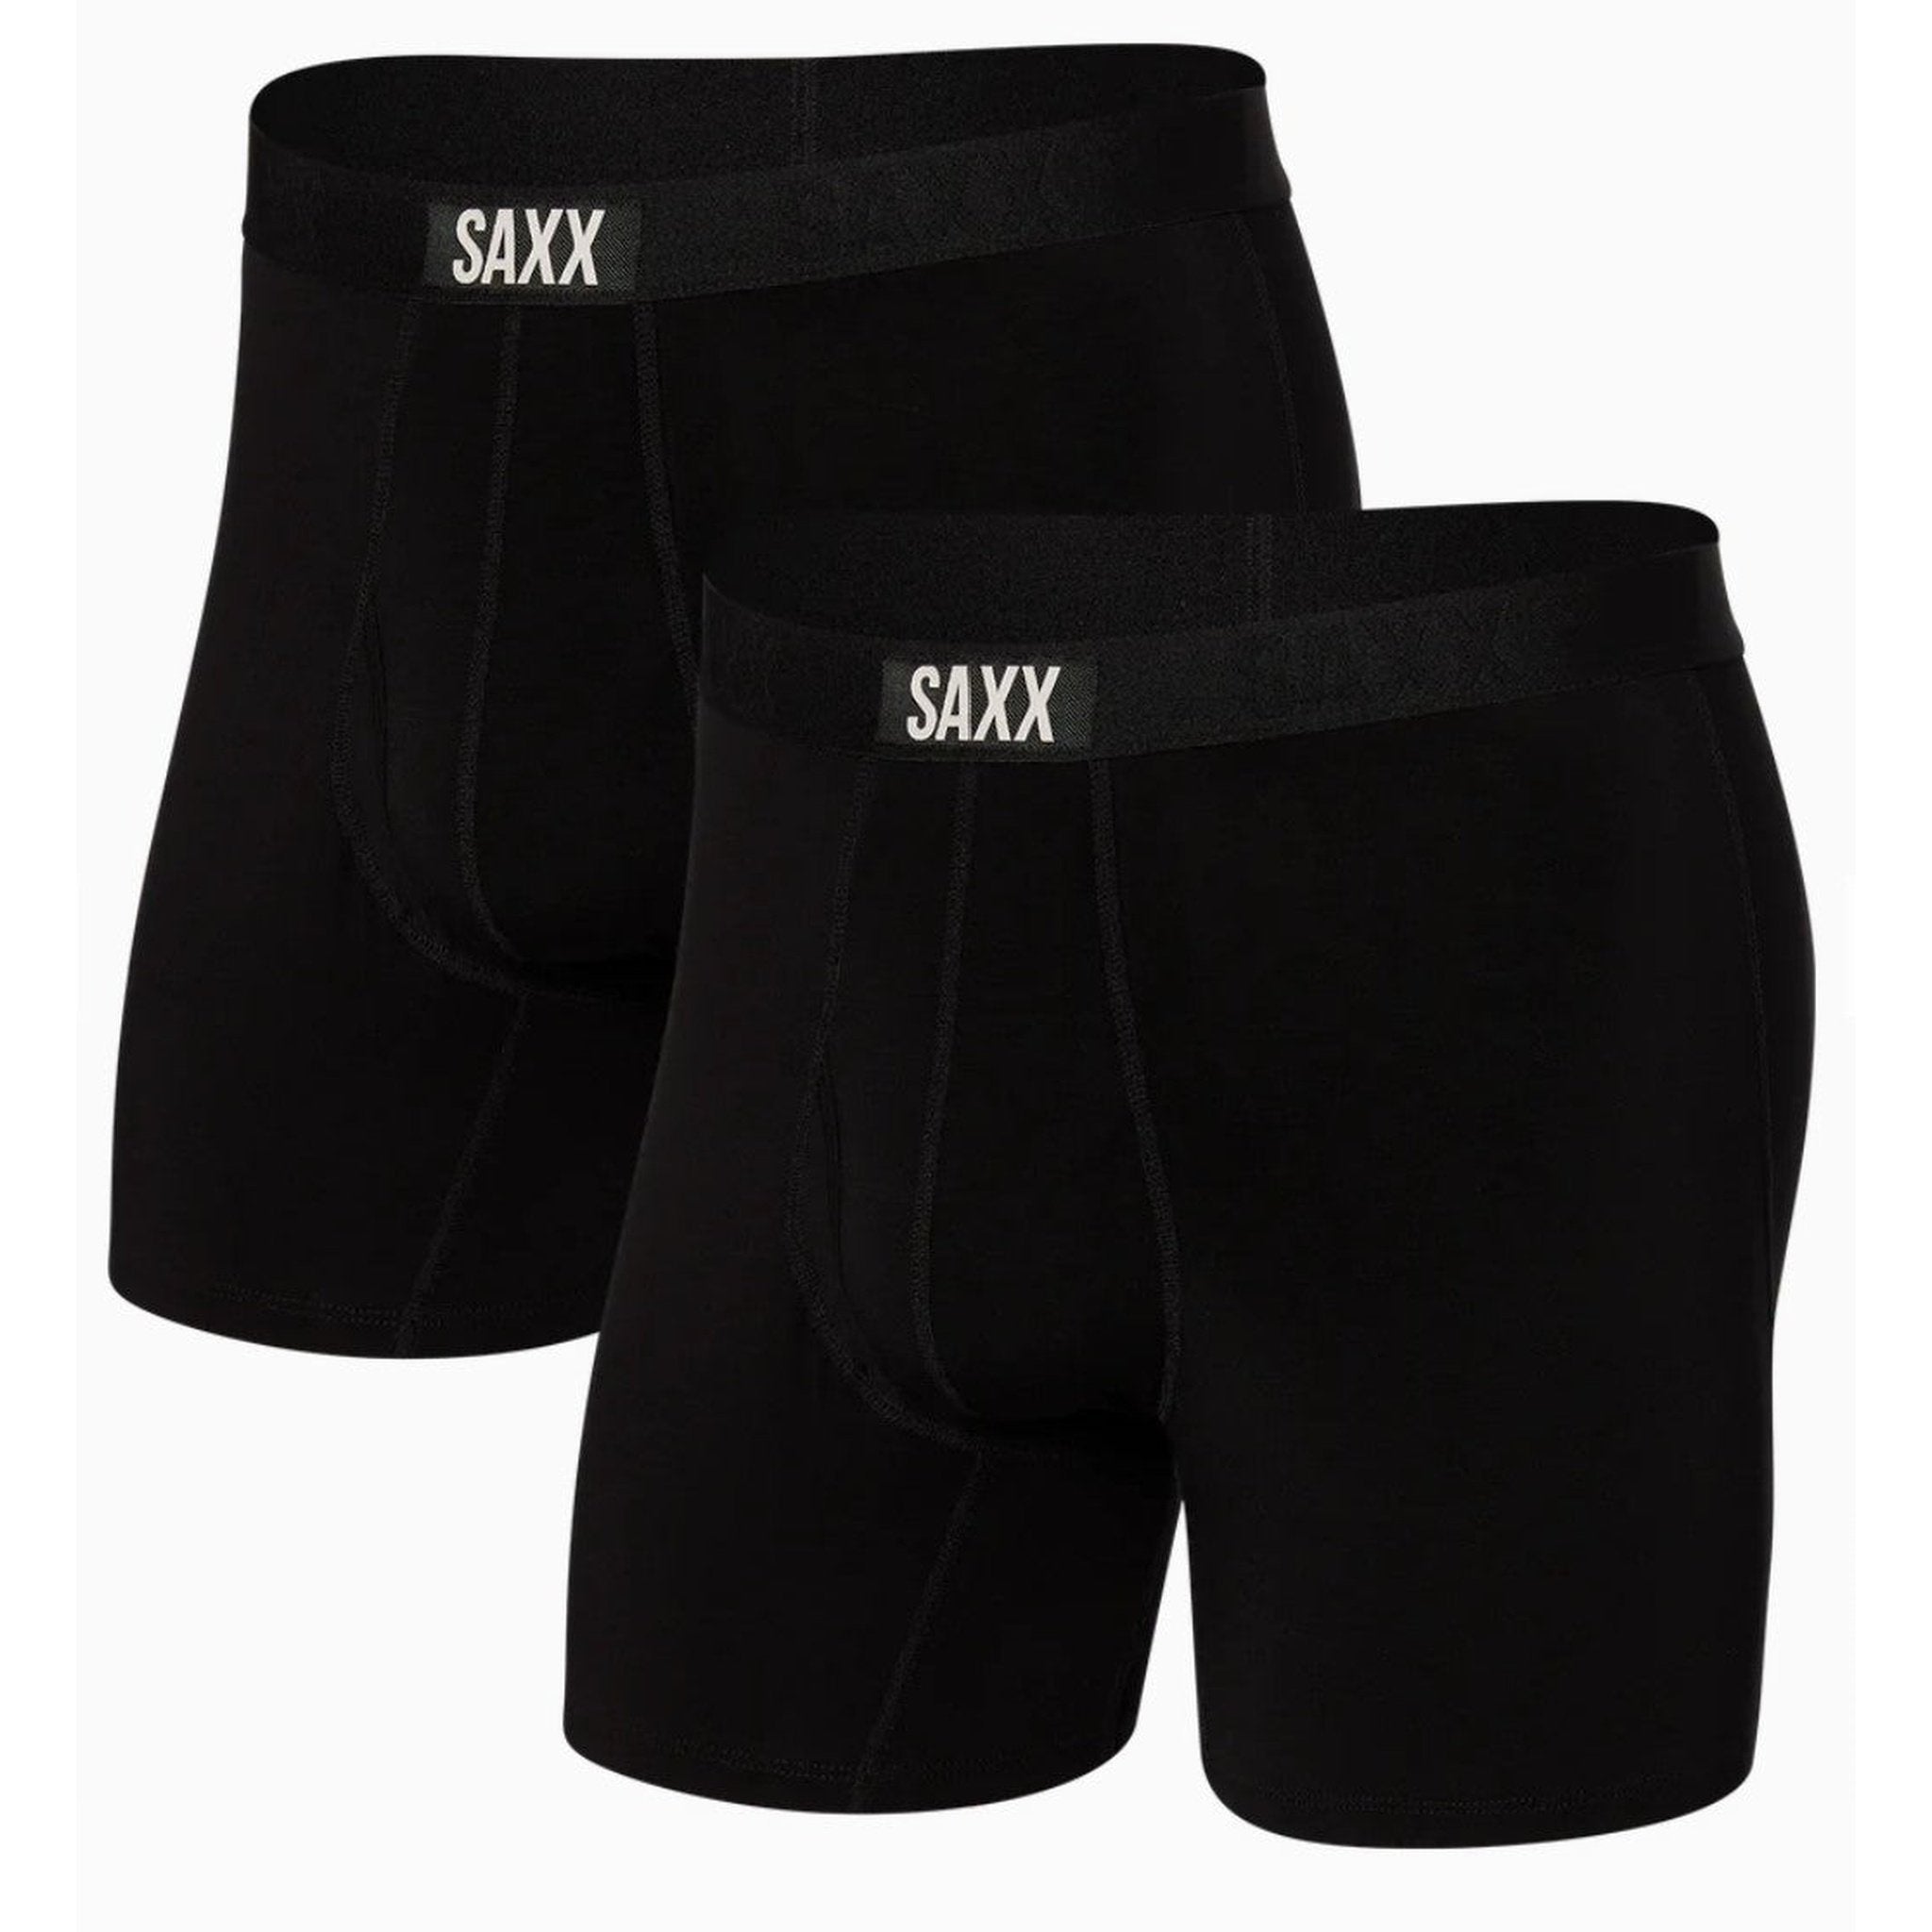 Saxx Vibe Super Soft Men's Boxer Brief 2 Pack in Black